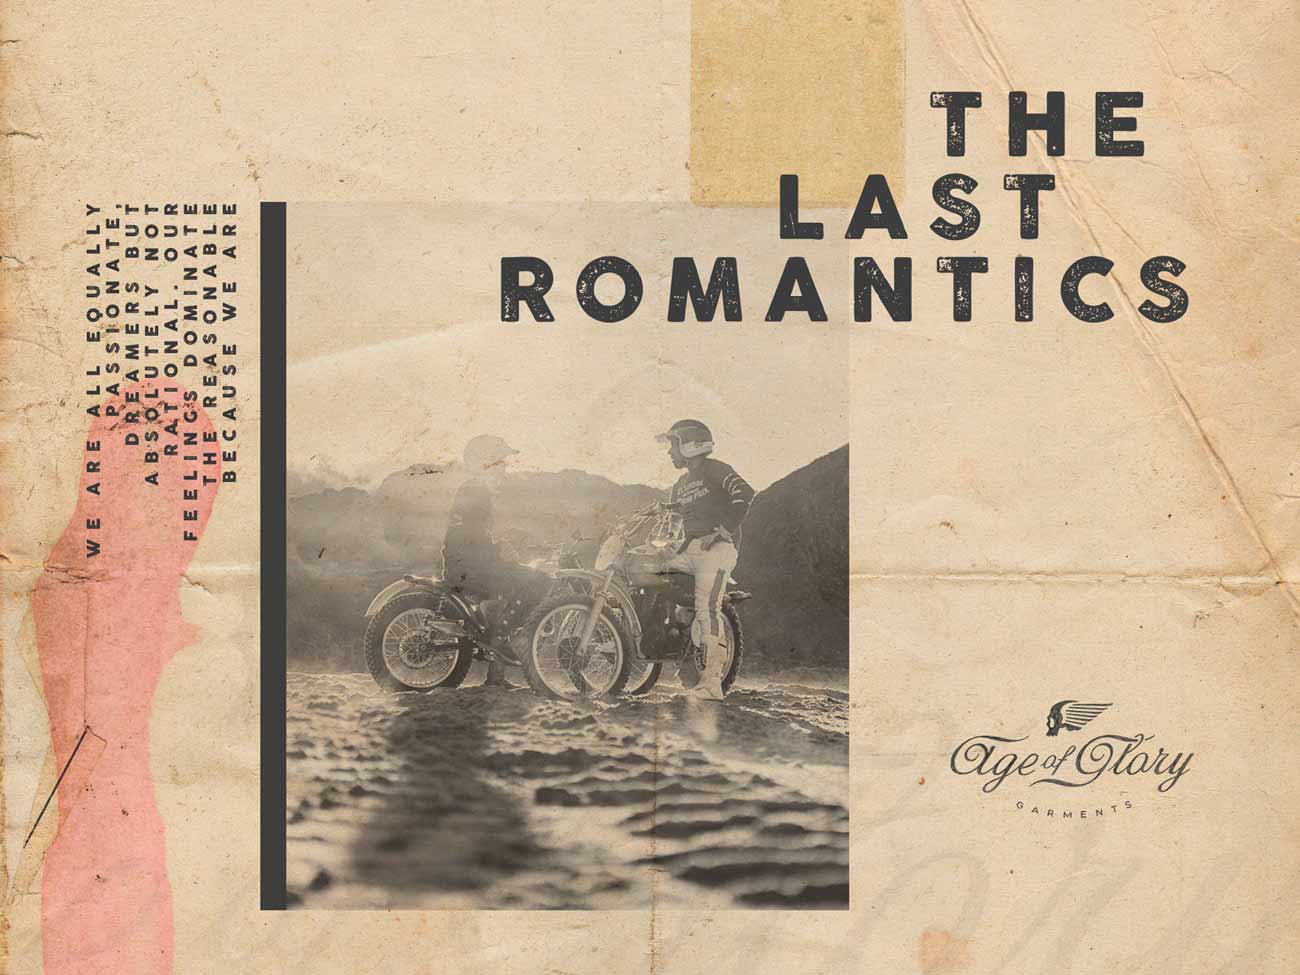 ageofglory link to The Last Romantics Video